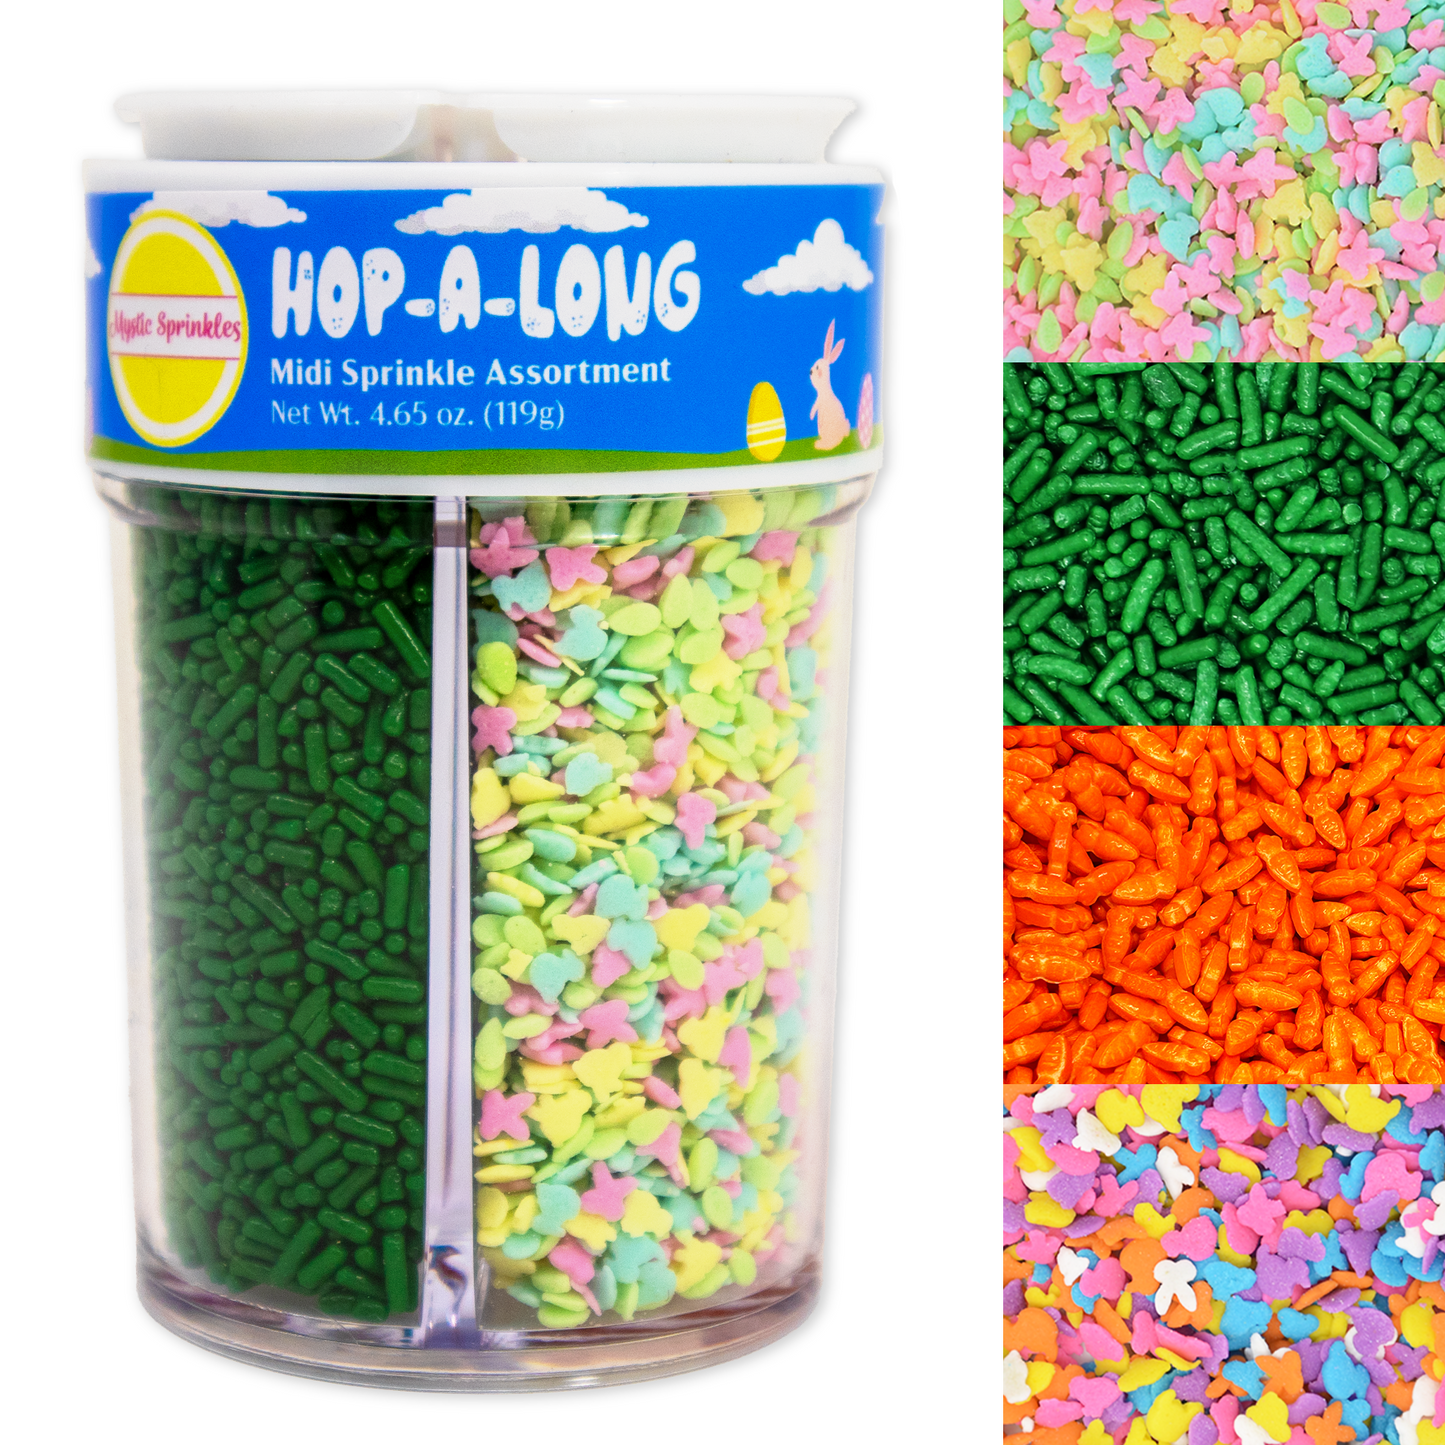 Hop-A-Long Midi Sprinkle Assortment 4.65